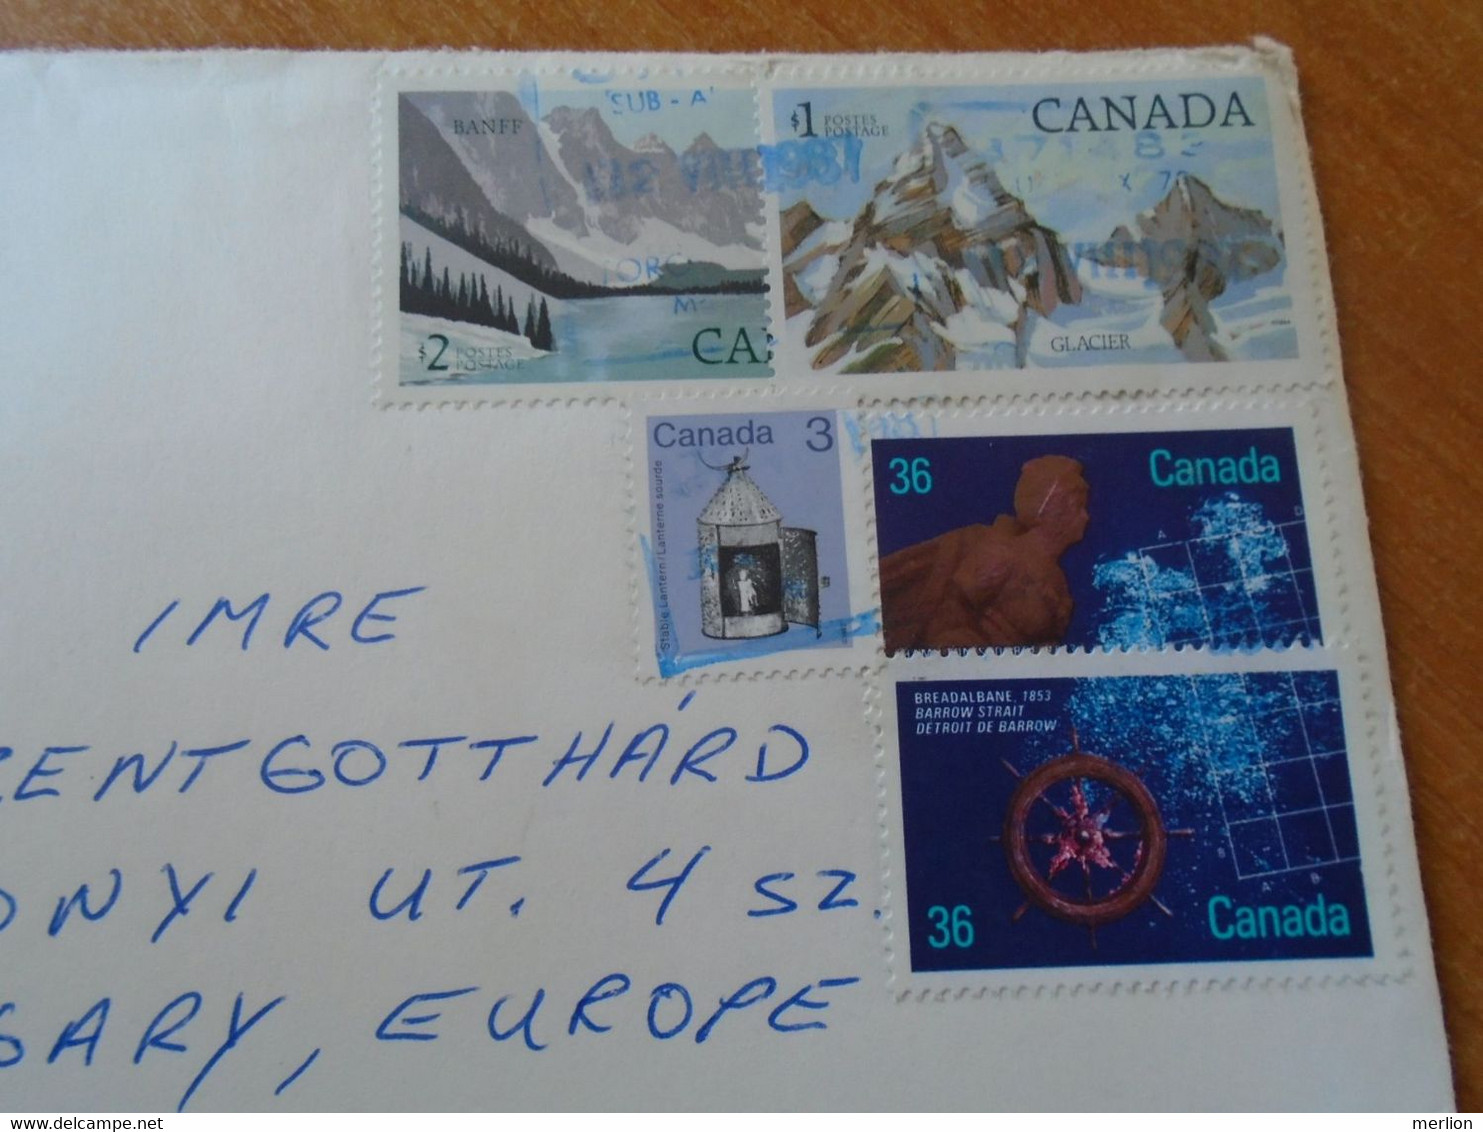 ZA405.6  CANADA  Registered Cover - Cancel 1987 Toronton ONT    Sent To Hungary - Storia Postale